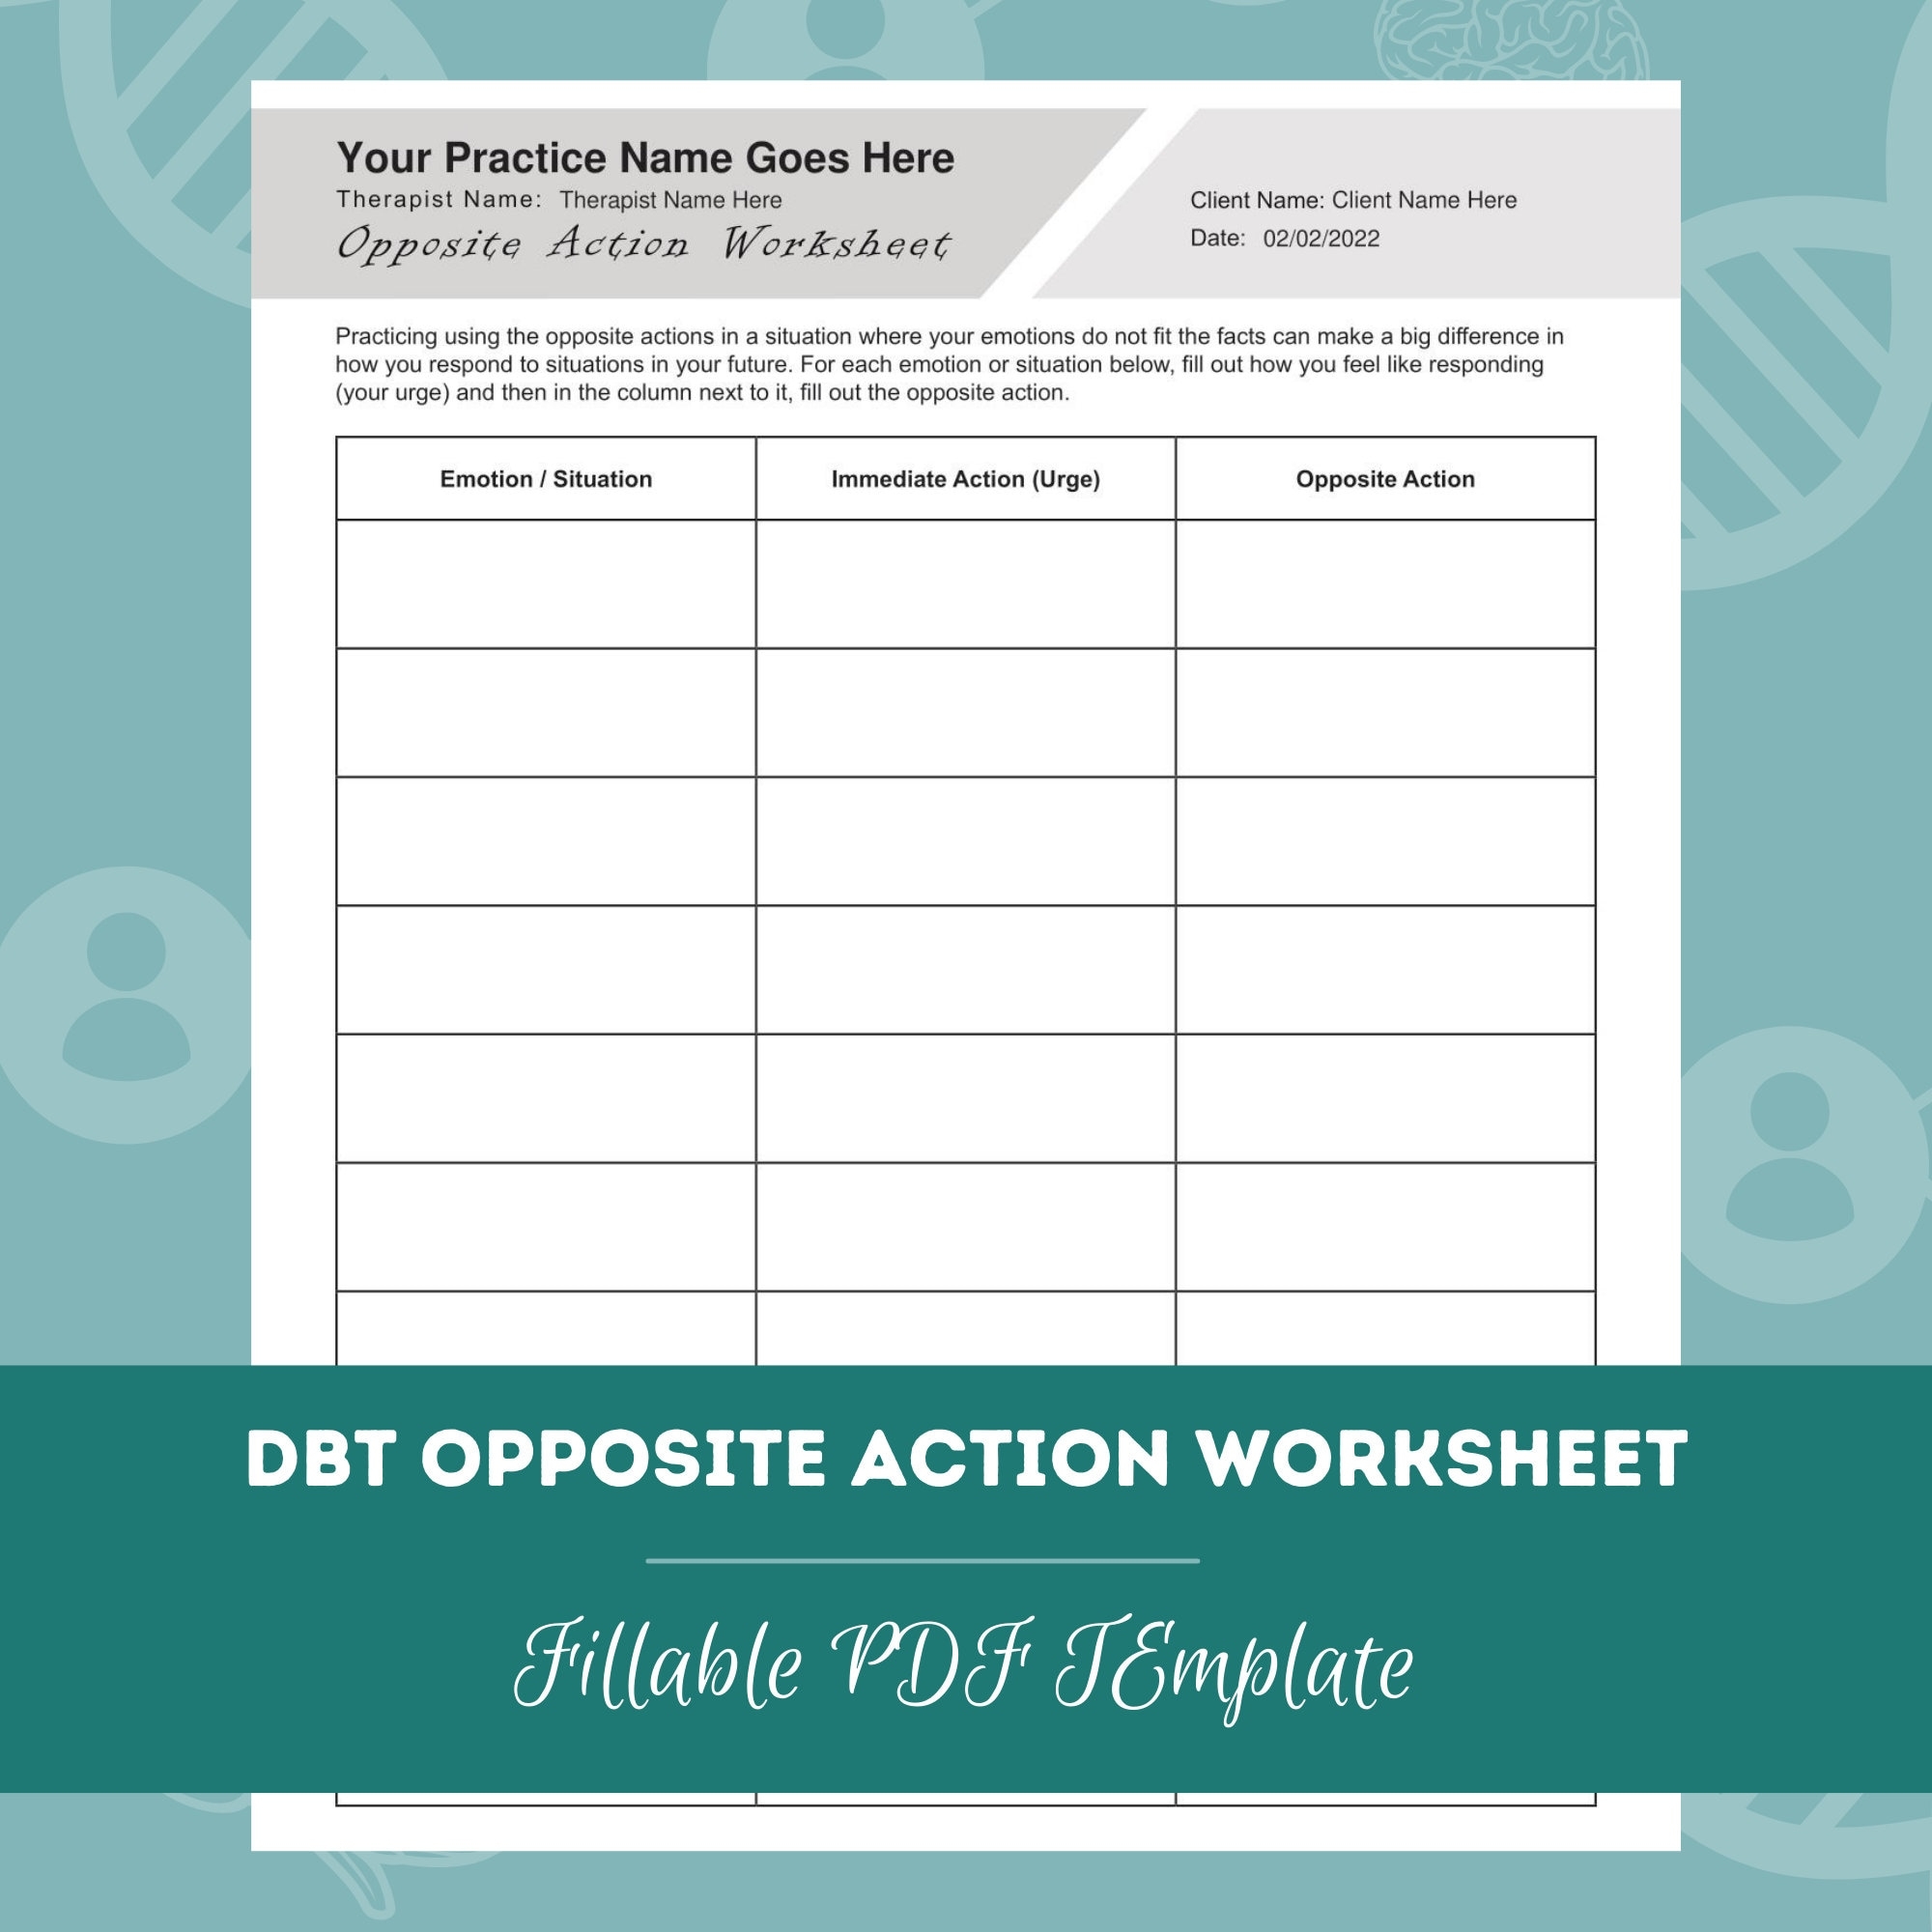 Dbt-A Progress Worksheet